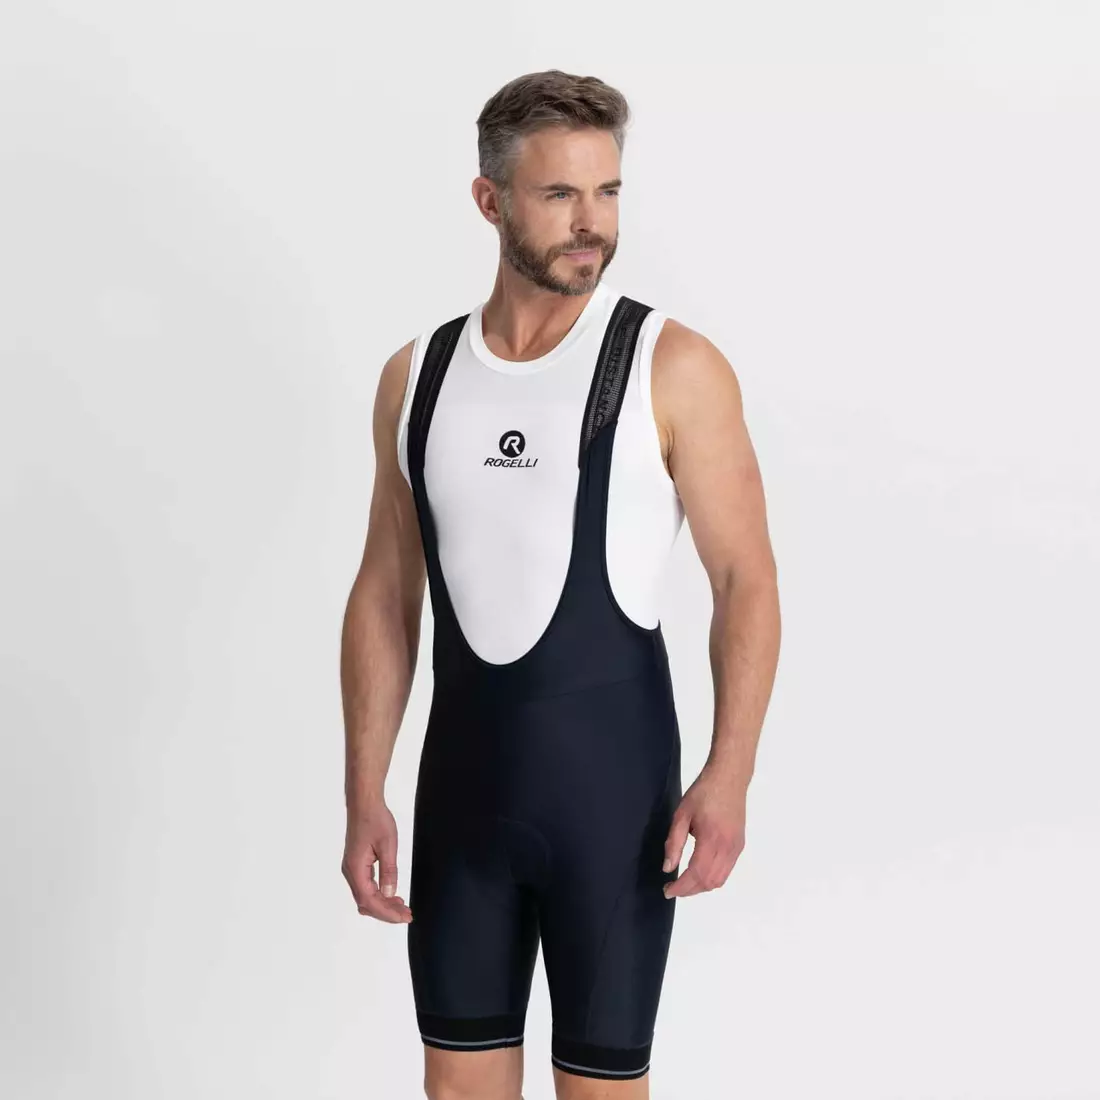 Rogelli FLEX II mens cycling bib shorts, navy blue